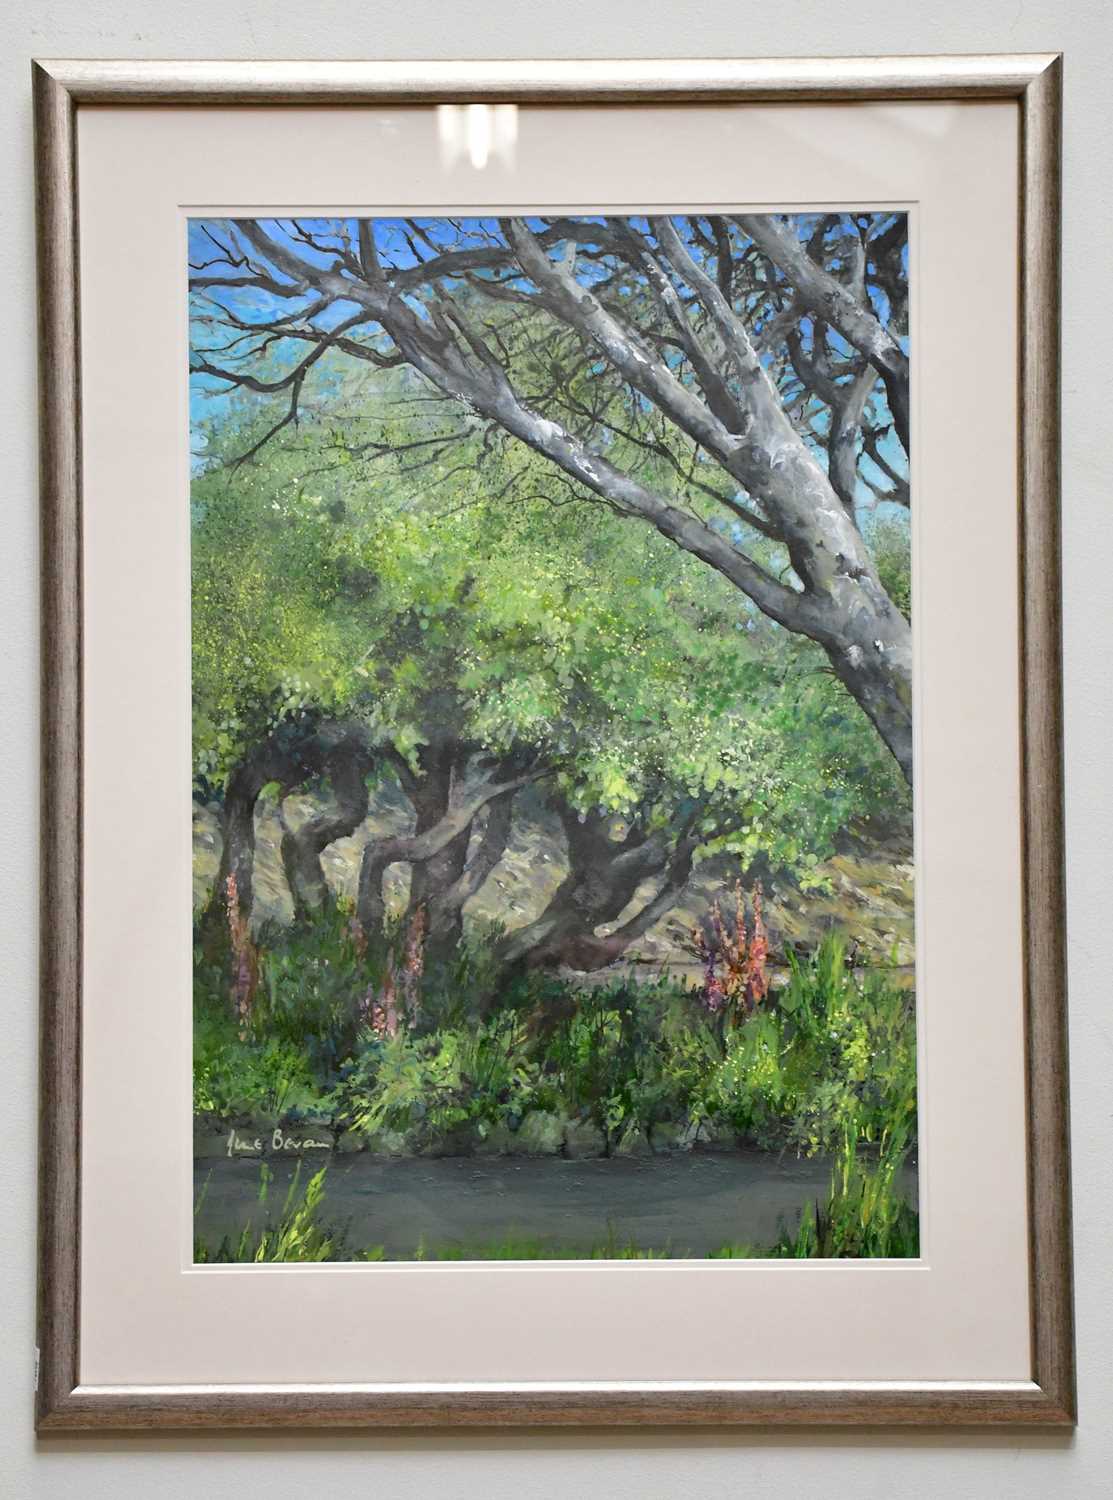 † JUNE BEVAN; mixed media, 'Trees at Styal Mill', signed lower left, 56 x 38cm, framed and glazed.